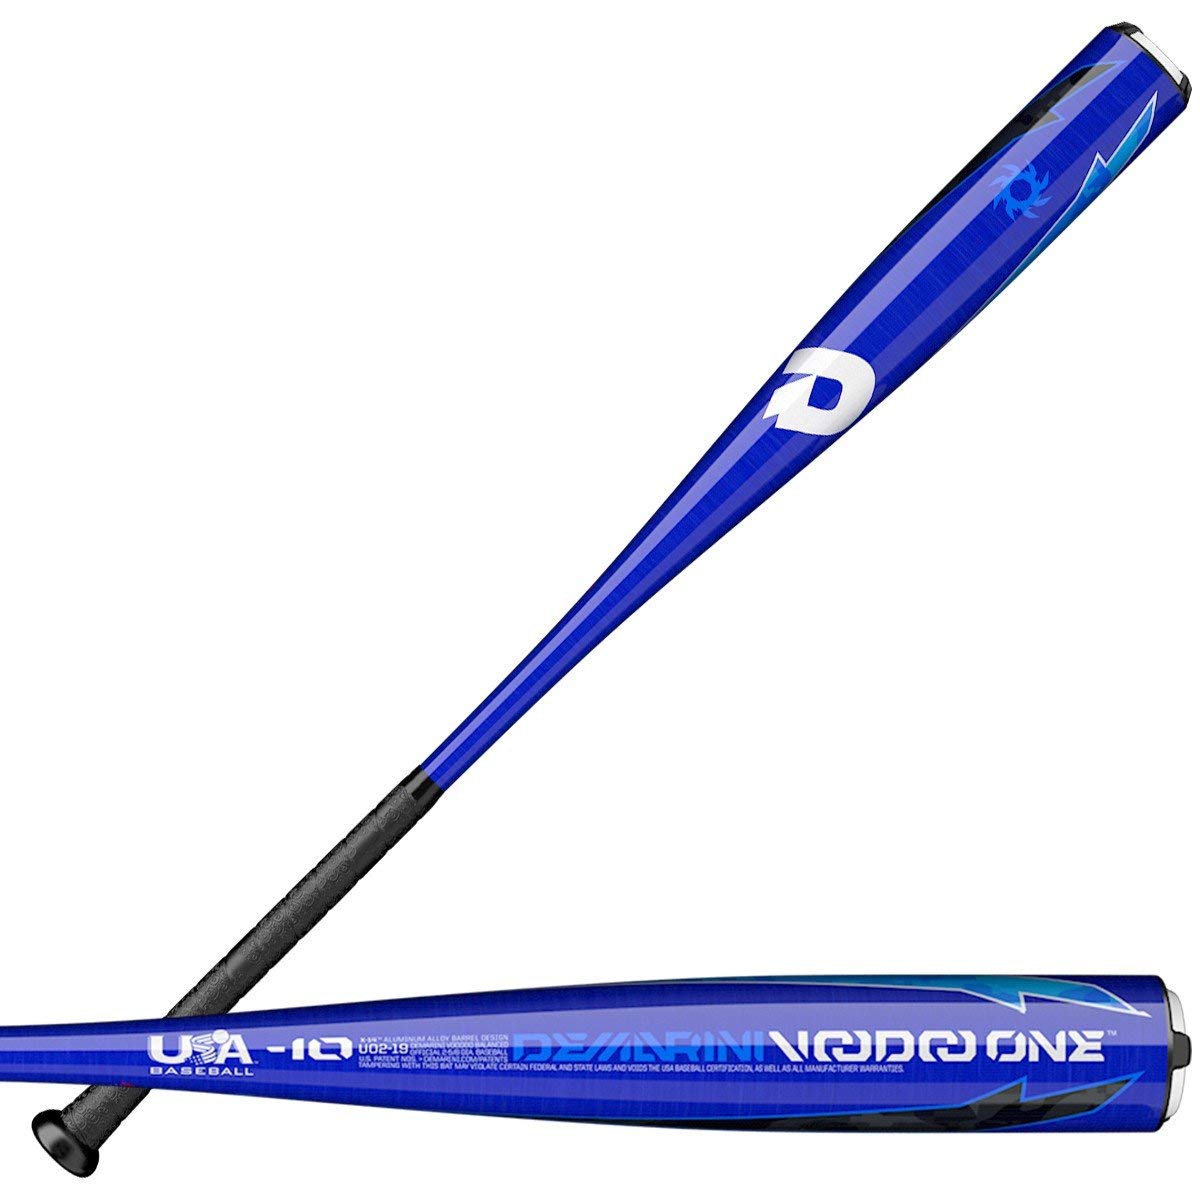 demarini-2019-voodoo-one-balanced-10-usa-baseball-bat-28-inch-18-oz WTDXUO21828-19 DeMarini 887768711900 `-10 Length to Weight Ratio Balanced Swing Weight One-Piece 100% X14